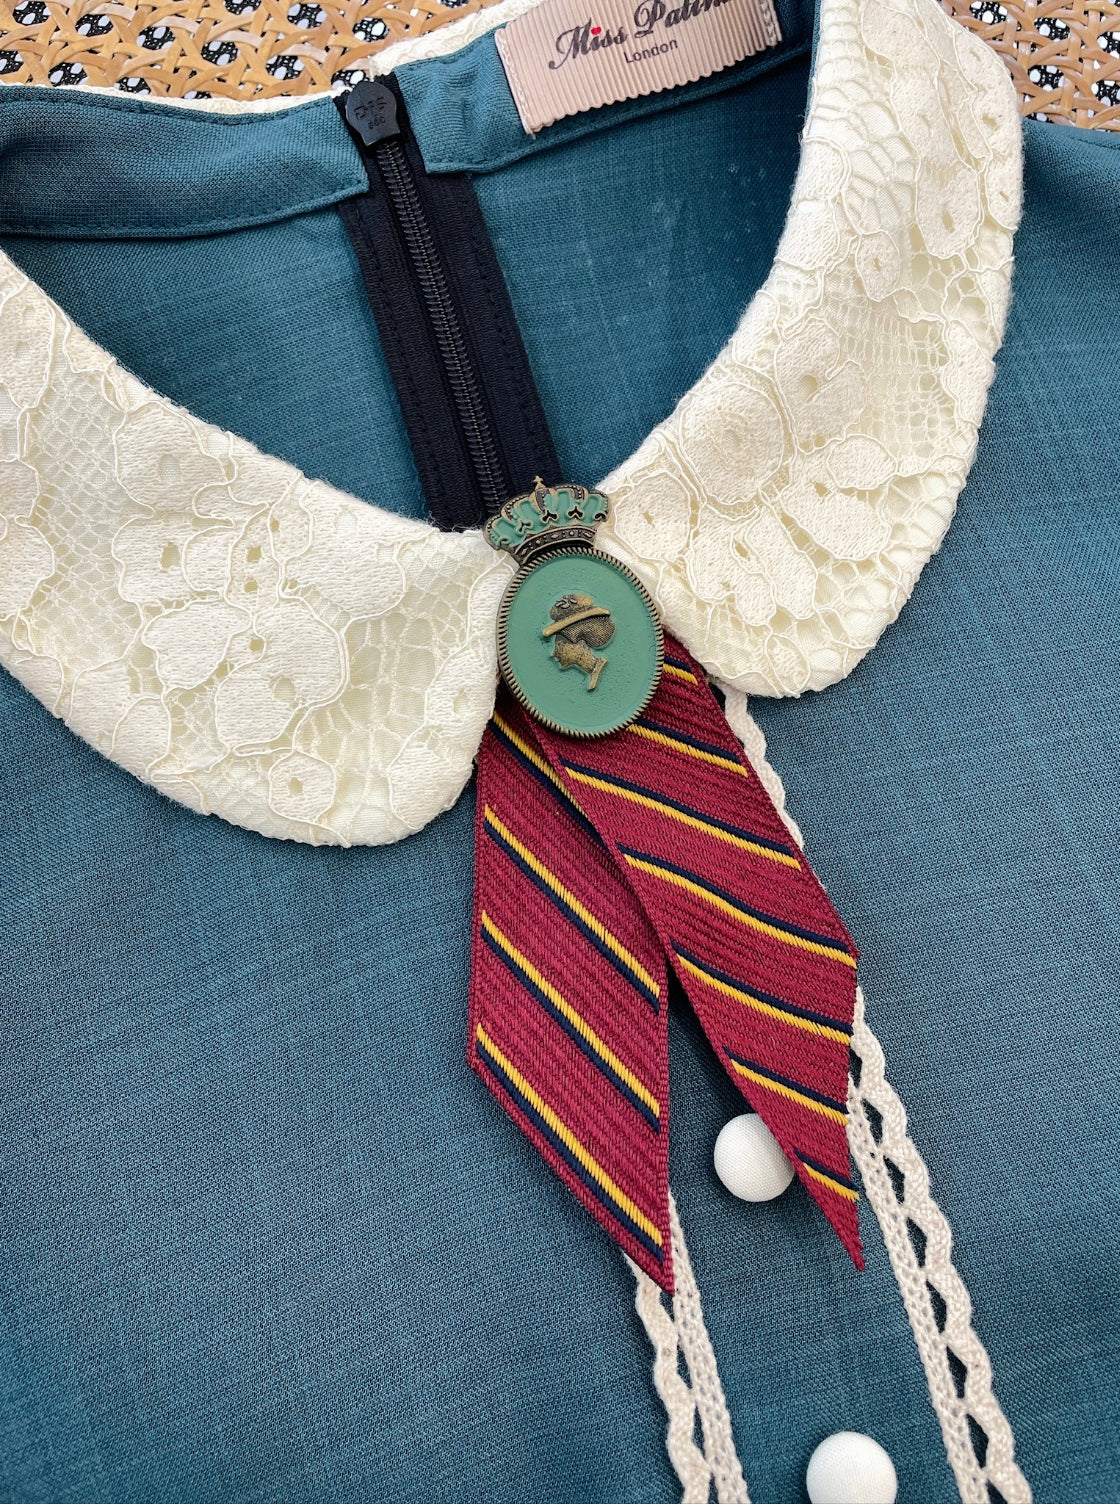 Elizabeth Handmade Striped Tie Brooch